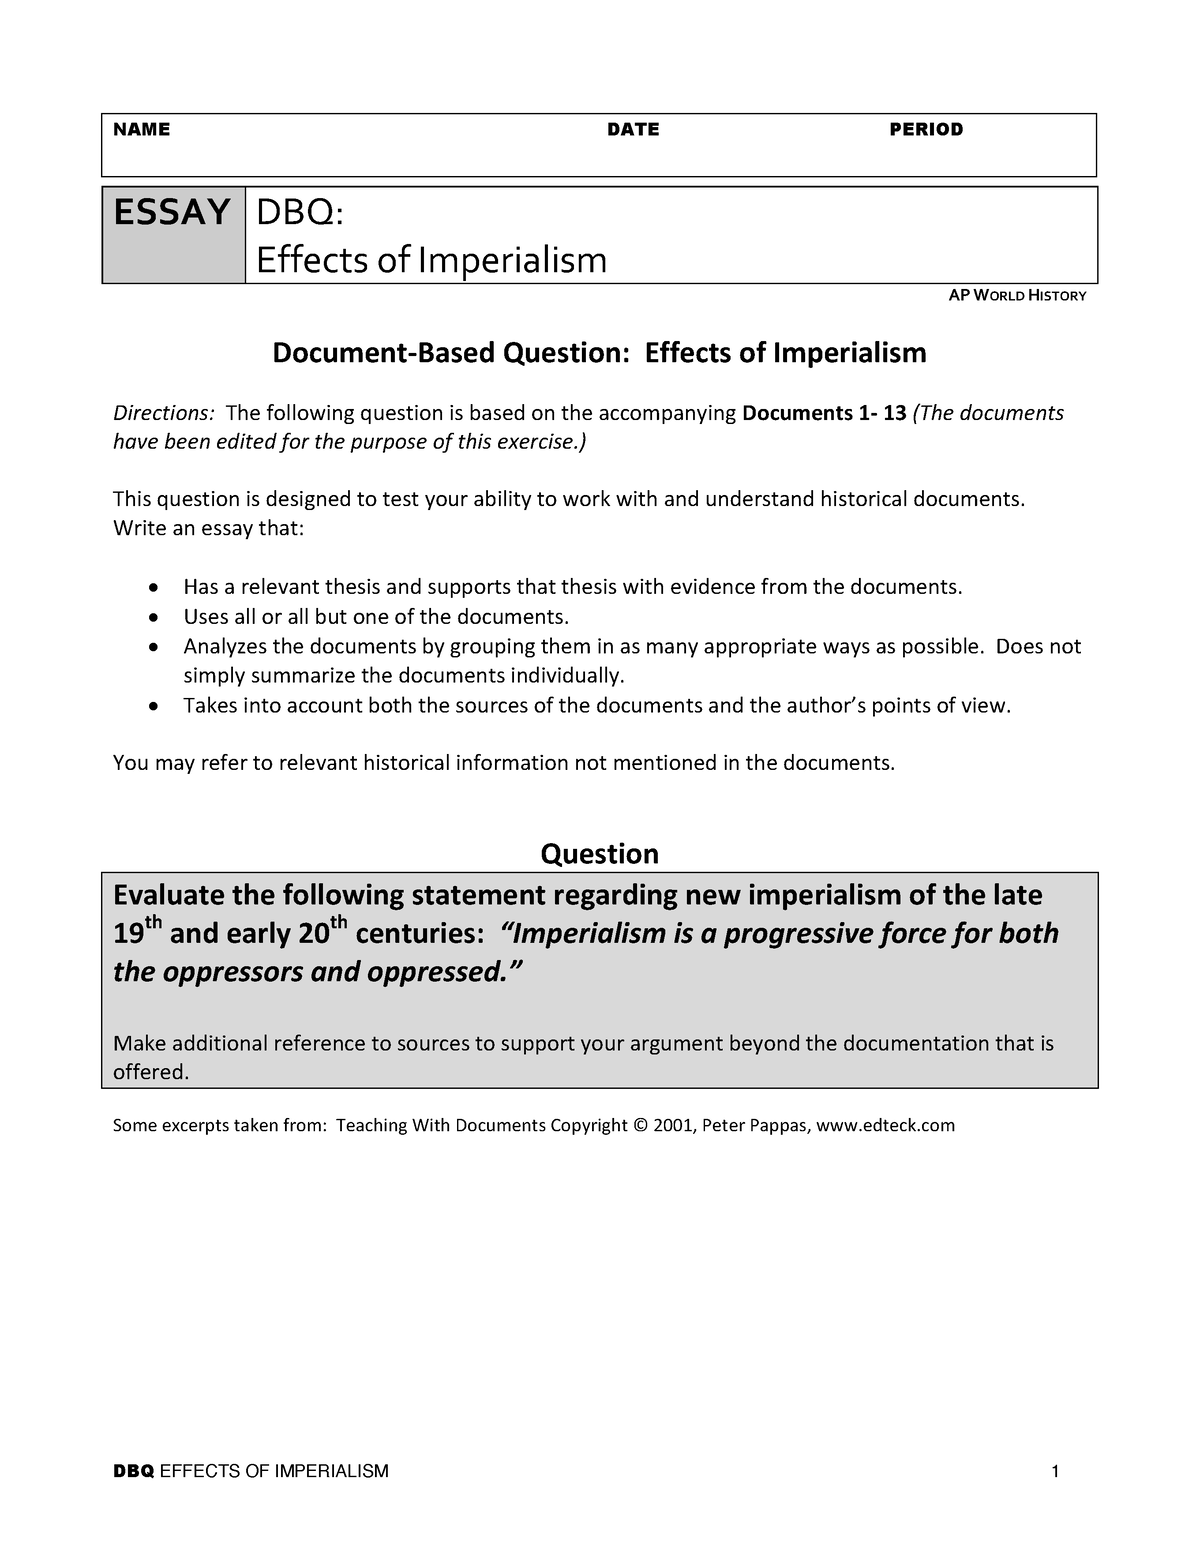 dbq effects of imperialism essay